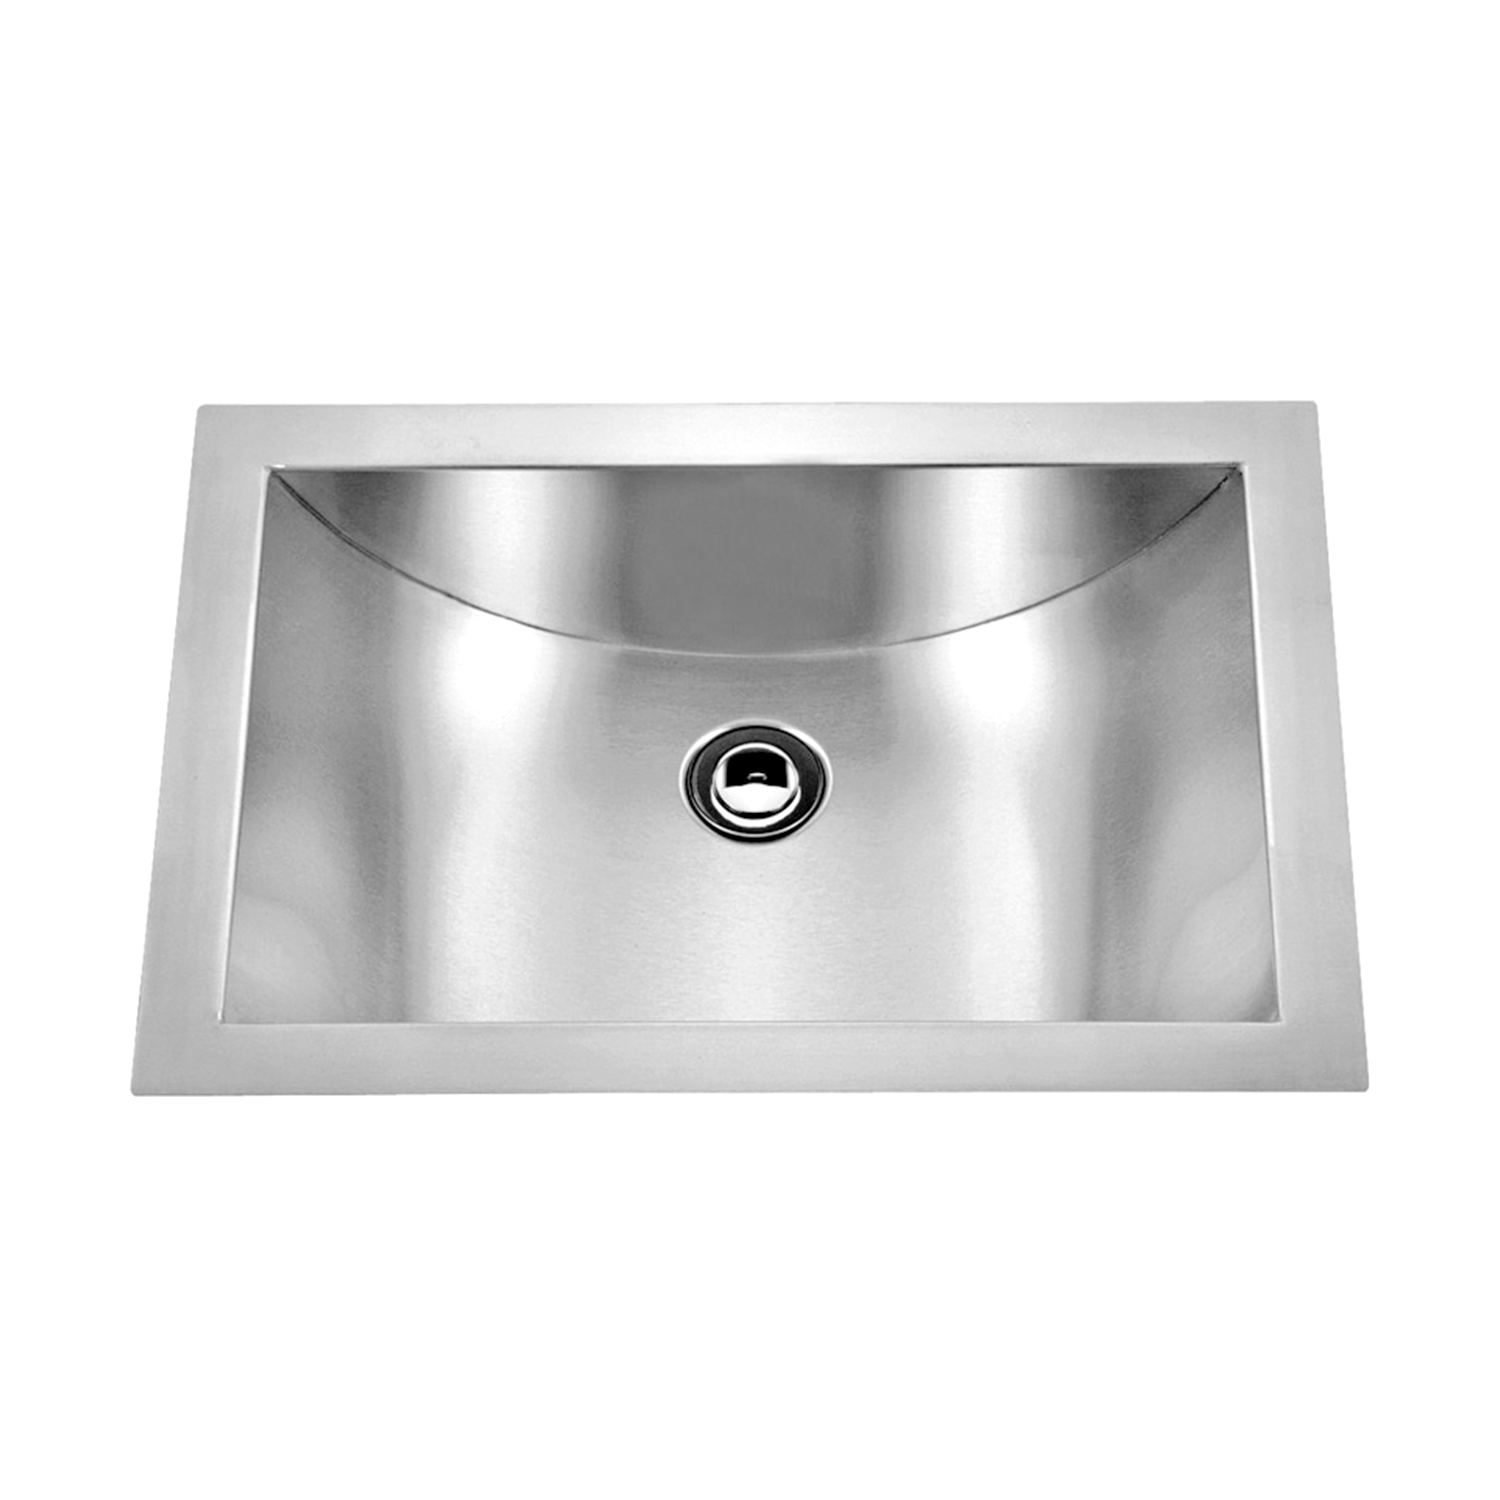 DAX Handmade Single Bowl Undermount Kitchen Sink, 18 Gauge Stainless Steel, Brushed Finish, 21 x 15 x 6 Inches (DAX-SQ-114)